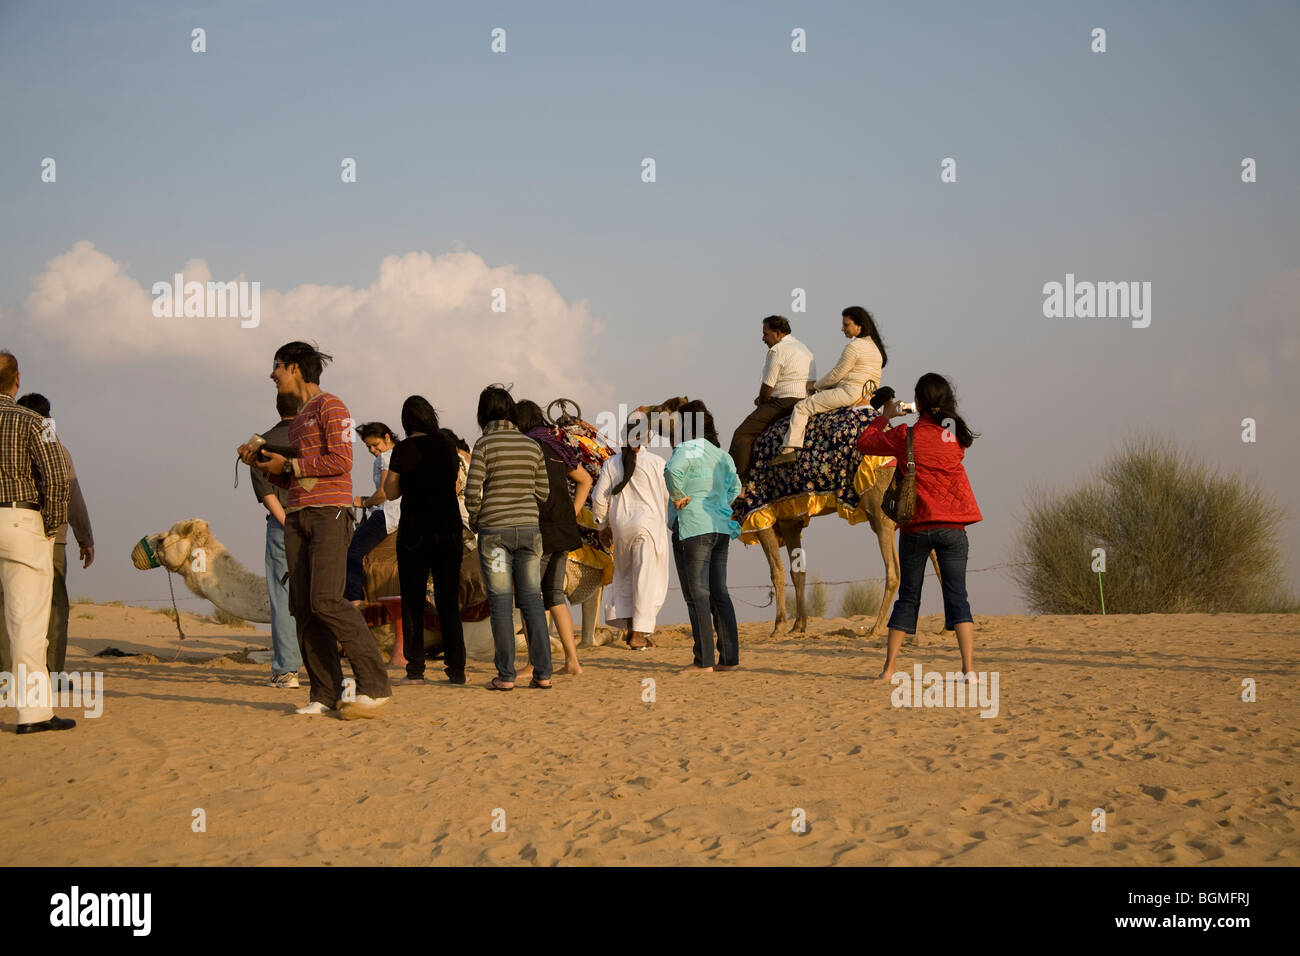 Dubai United Arab Emirates Tourists queuing for camel rides in the desert Stock Photo